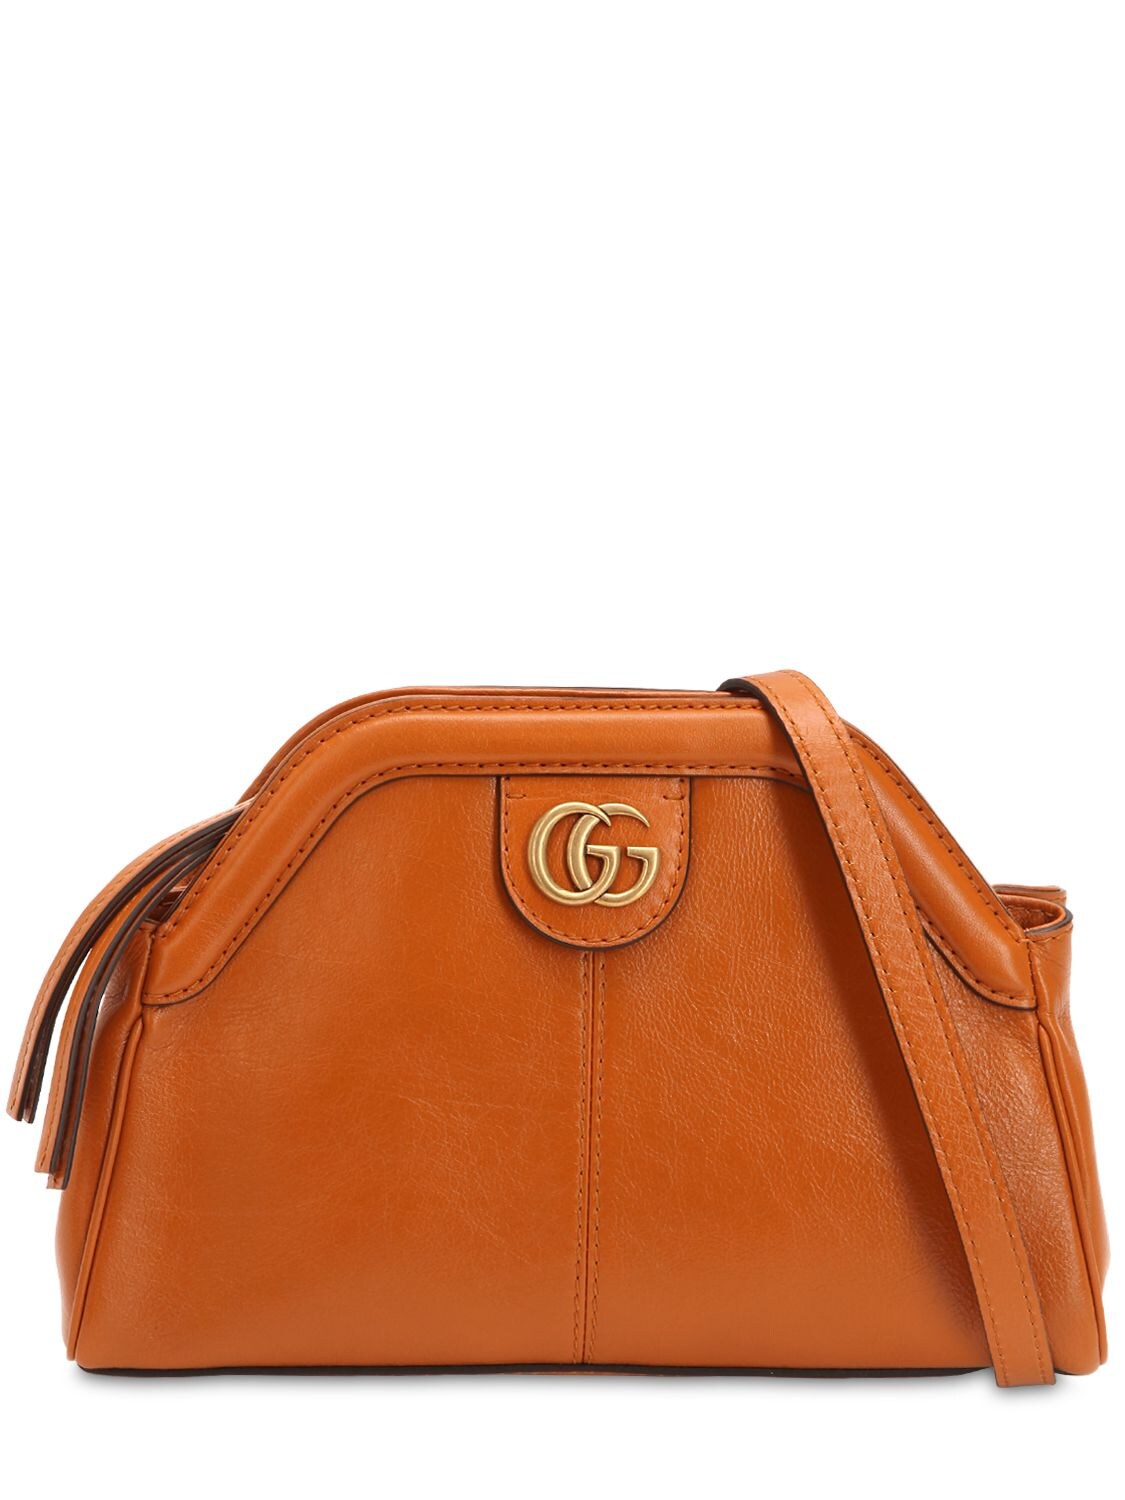 Gucci Leather Shoulder Bag In Brown